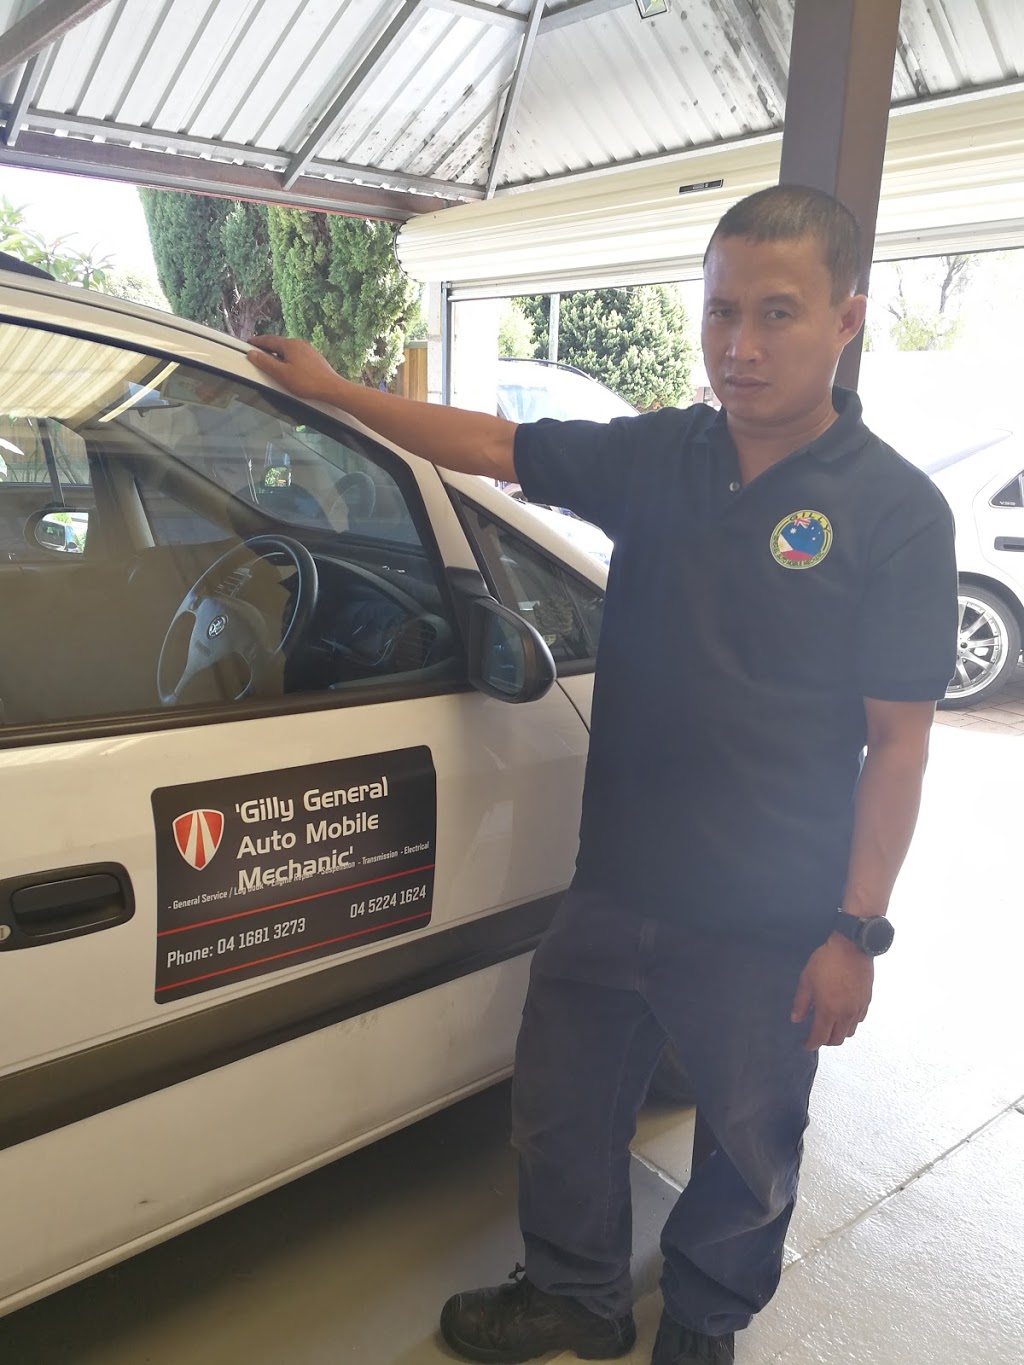 Gilly General Auto Mobile Mechanic European Car Specialist | car repair | 118 Nollamara Ave, Nollamara WA 6061, Australia | 0416813273 OR +61 416 813 273